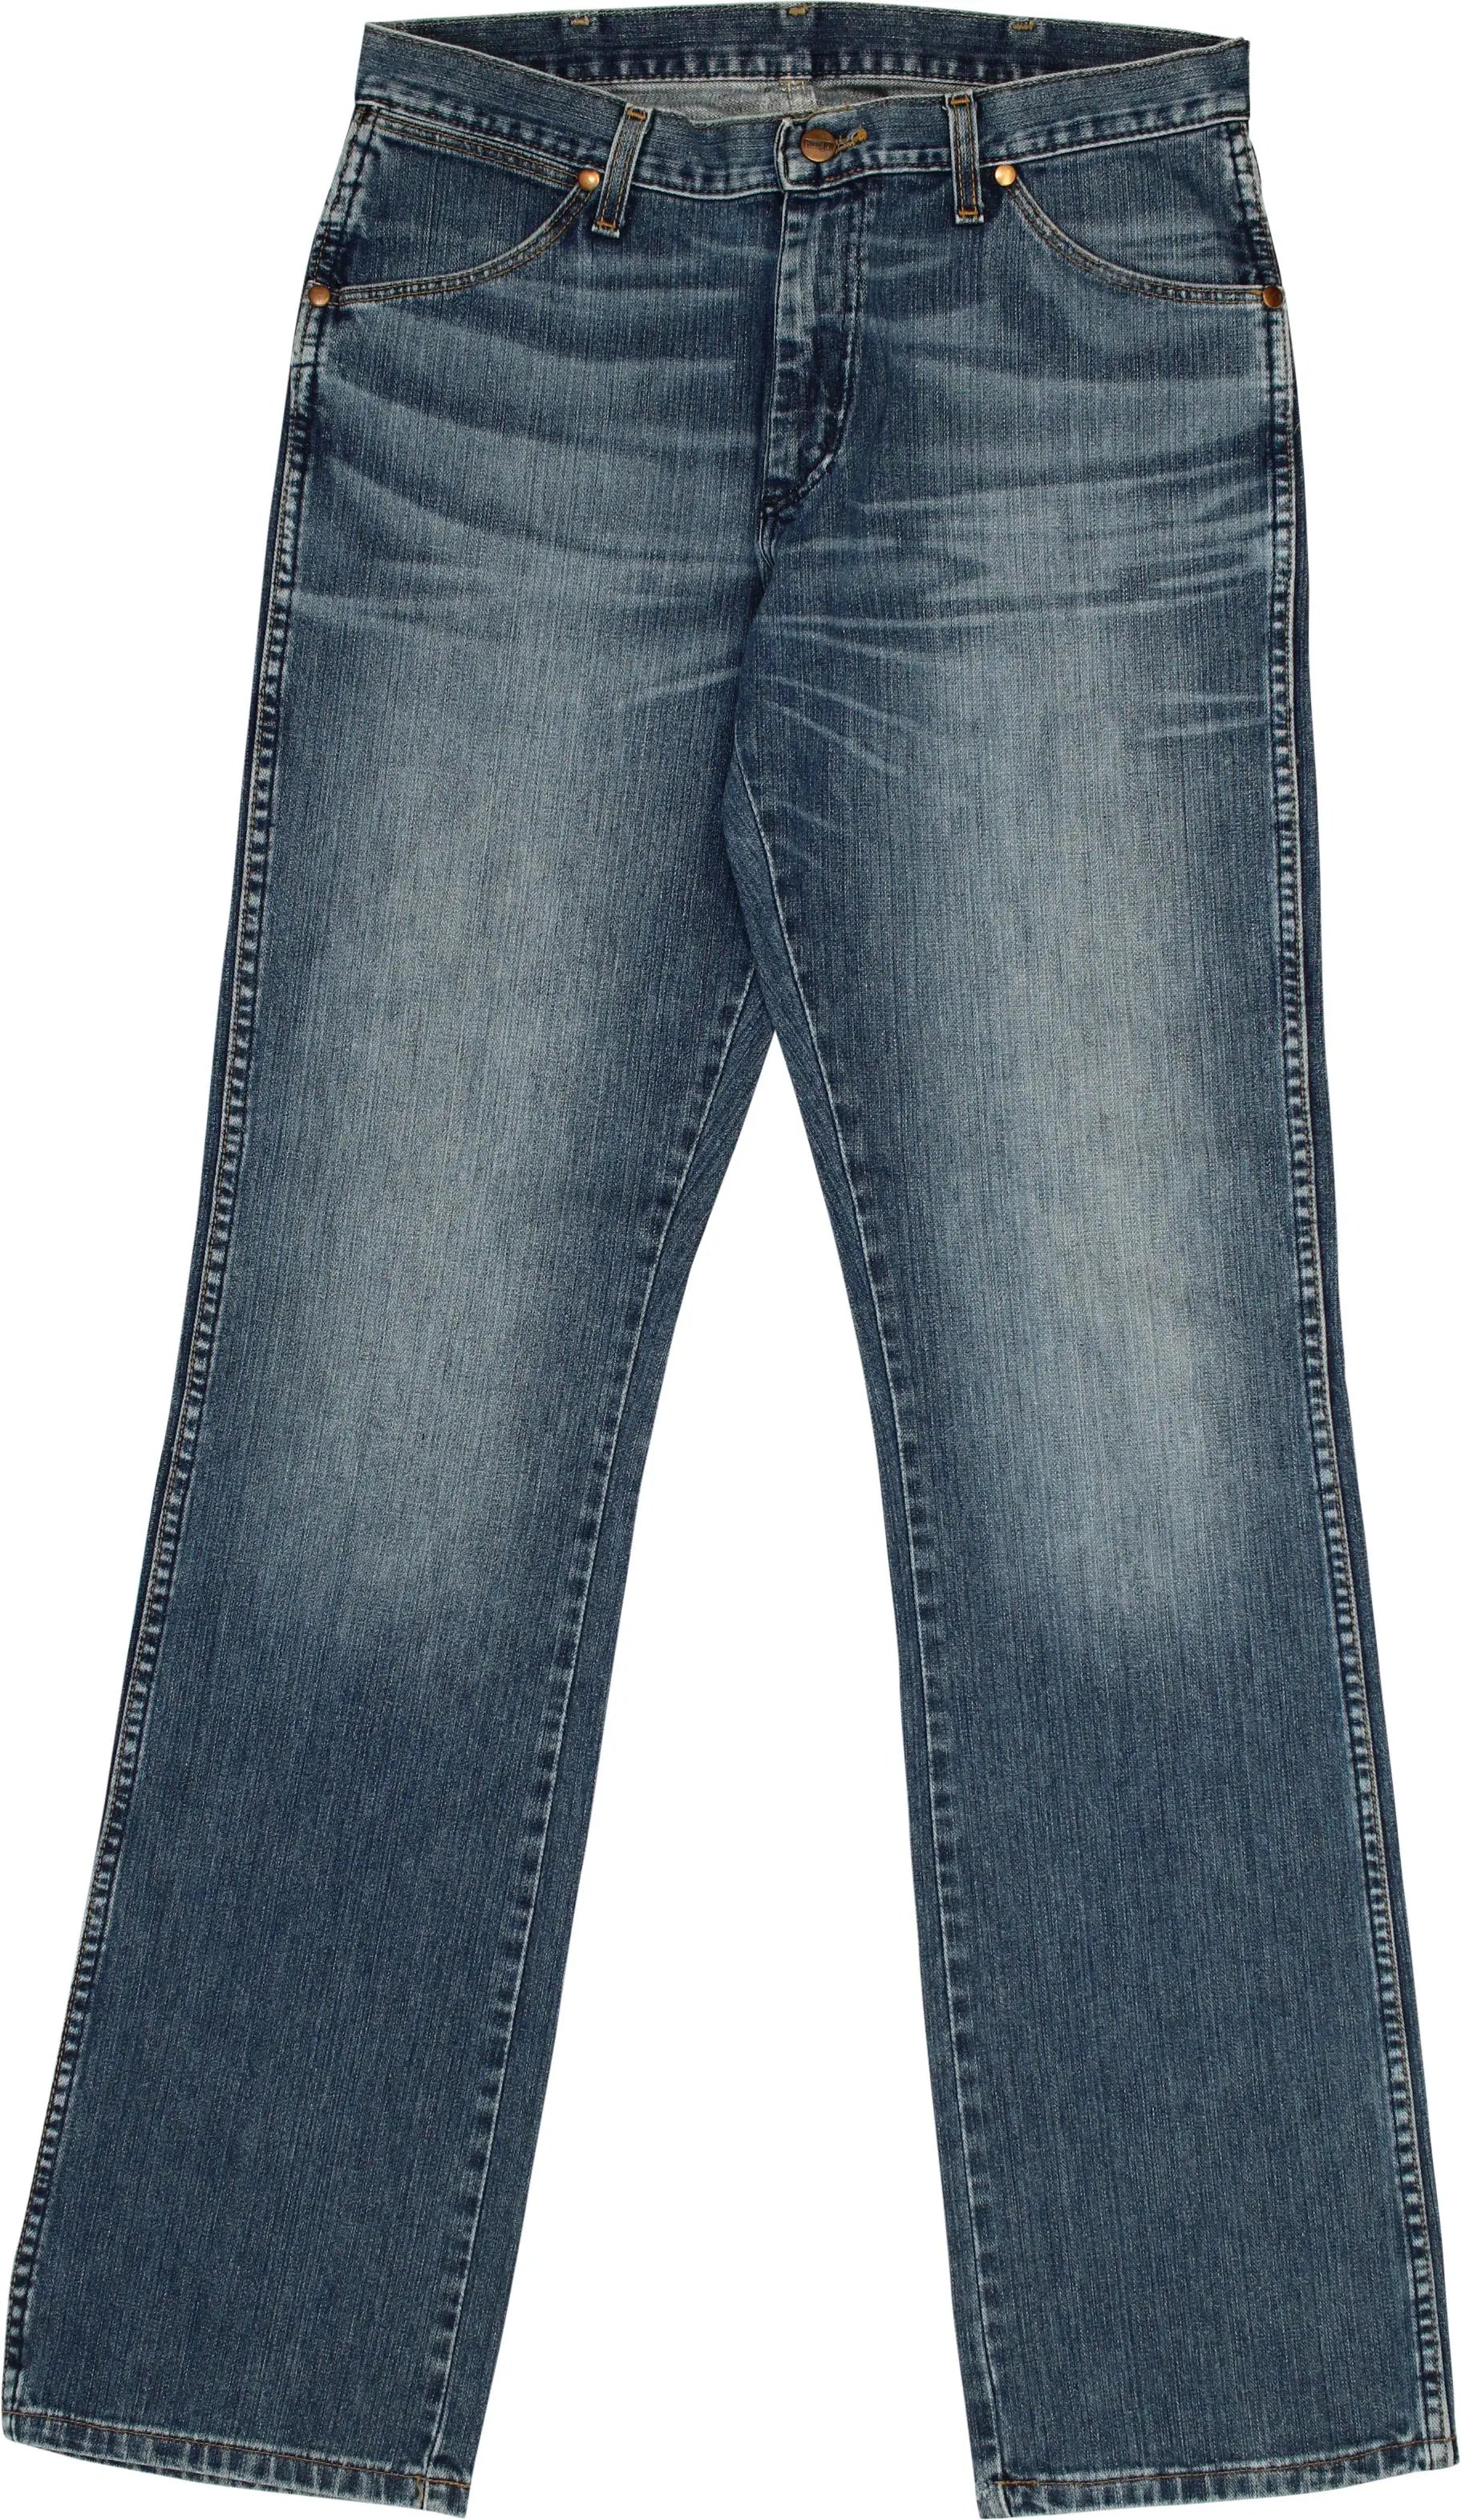 Wrangler - Wrangler Broken Twill Regular Fit Jeans- ThriftTale.com - Vintage and second handclothing